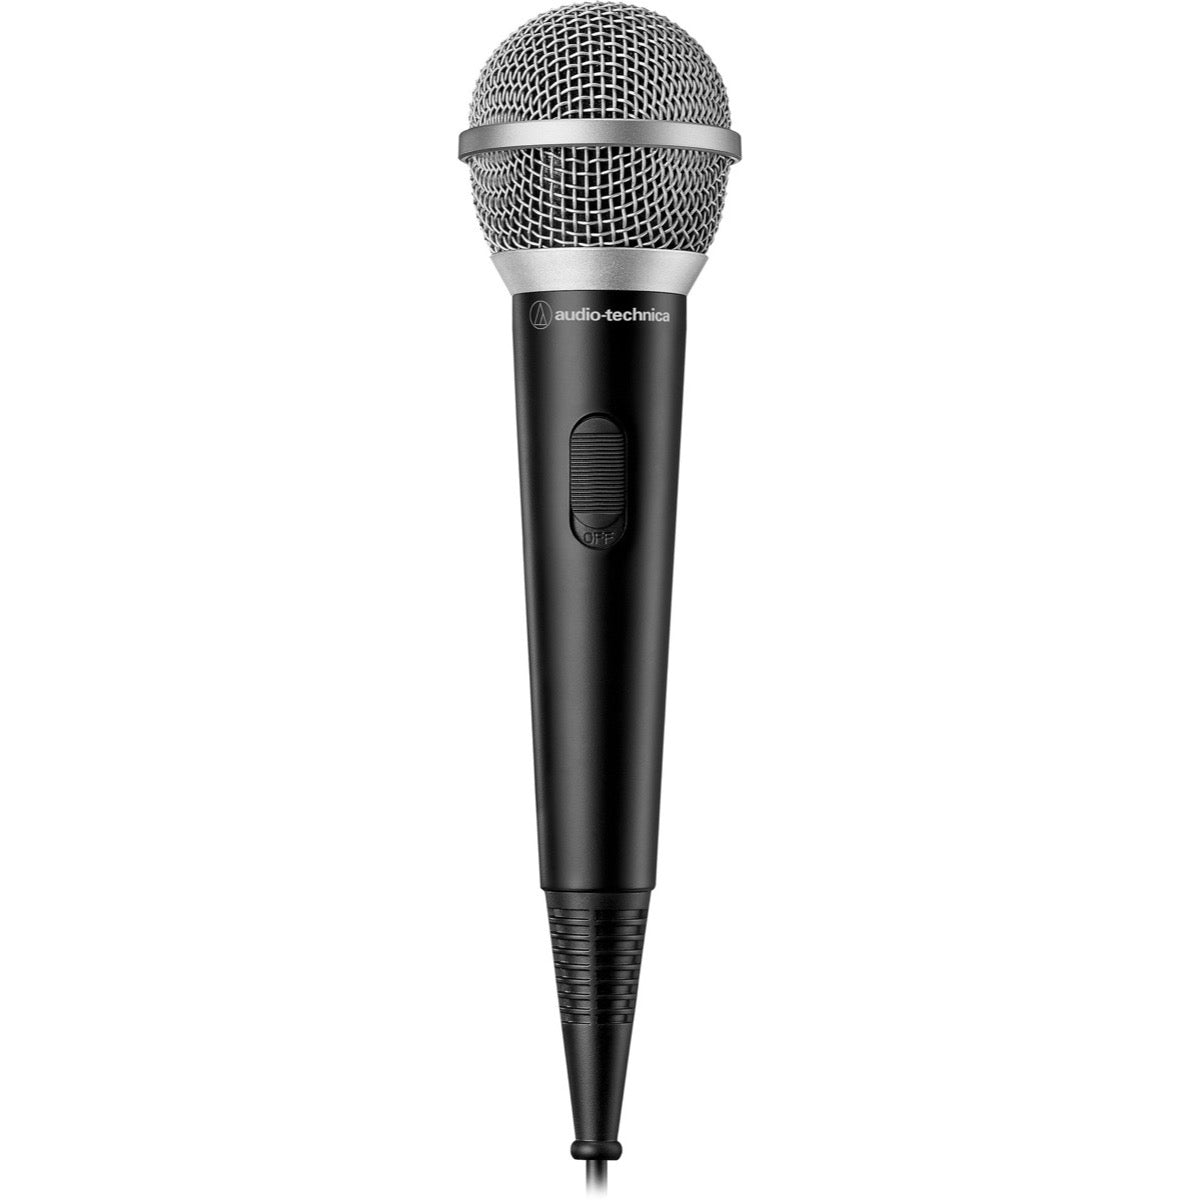 Audio-Technica ATR1200x Unidirectional Handheld Vocal Microphone